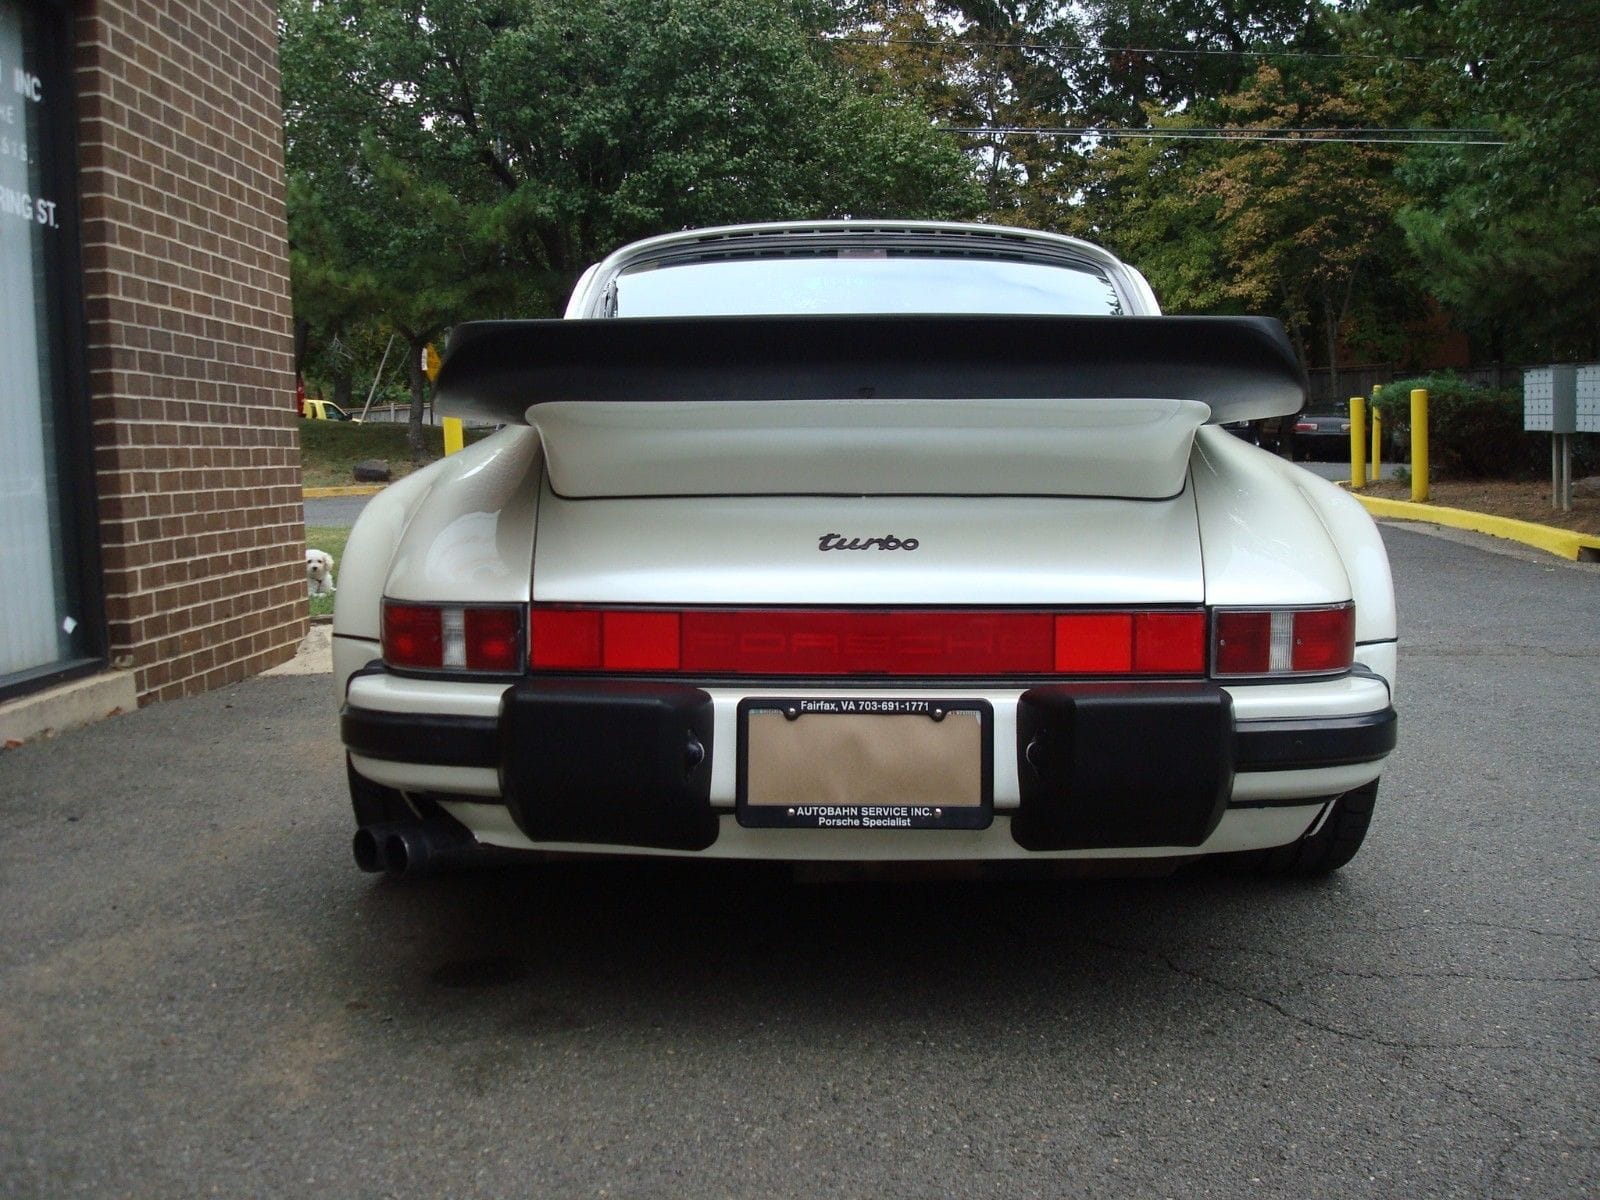 1988 Porsche 911 - 1988 Porsche 911 Turbo, Genuine Original USA Market 930 - Used - VIN WP0JB0939JS050381 - 91,400 Miles - 6 cyl - Manual - White - Woodbridge, VA 22192, United States